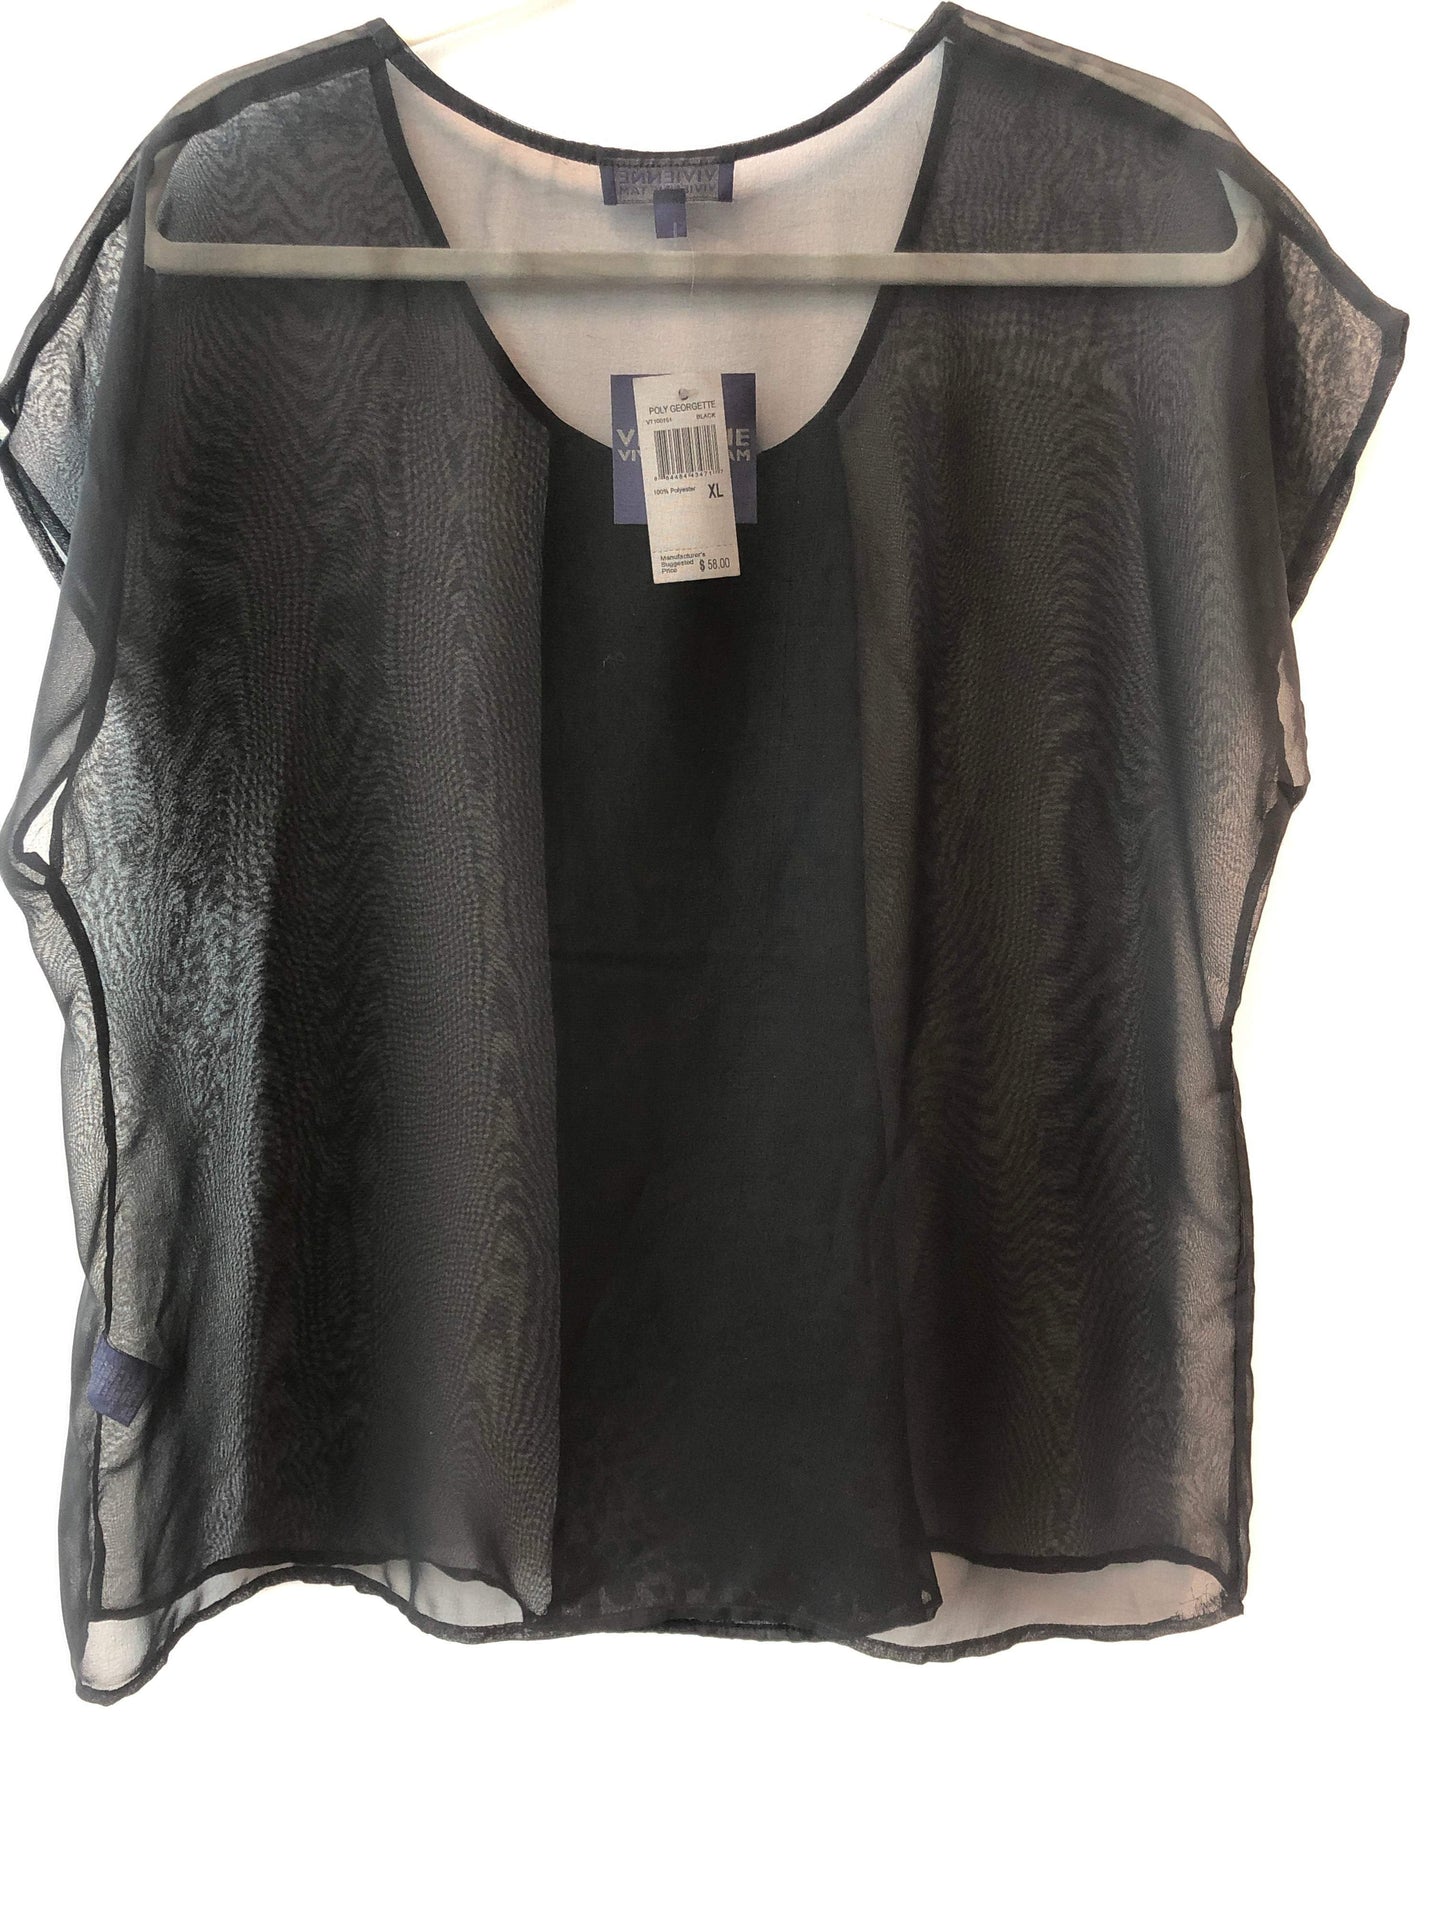 Vivienne Tam XL Black Polyester Shirt NWT